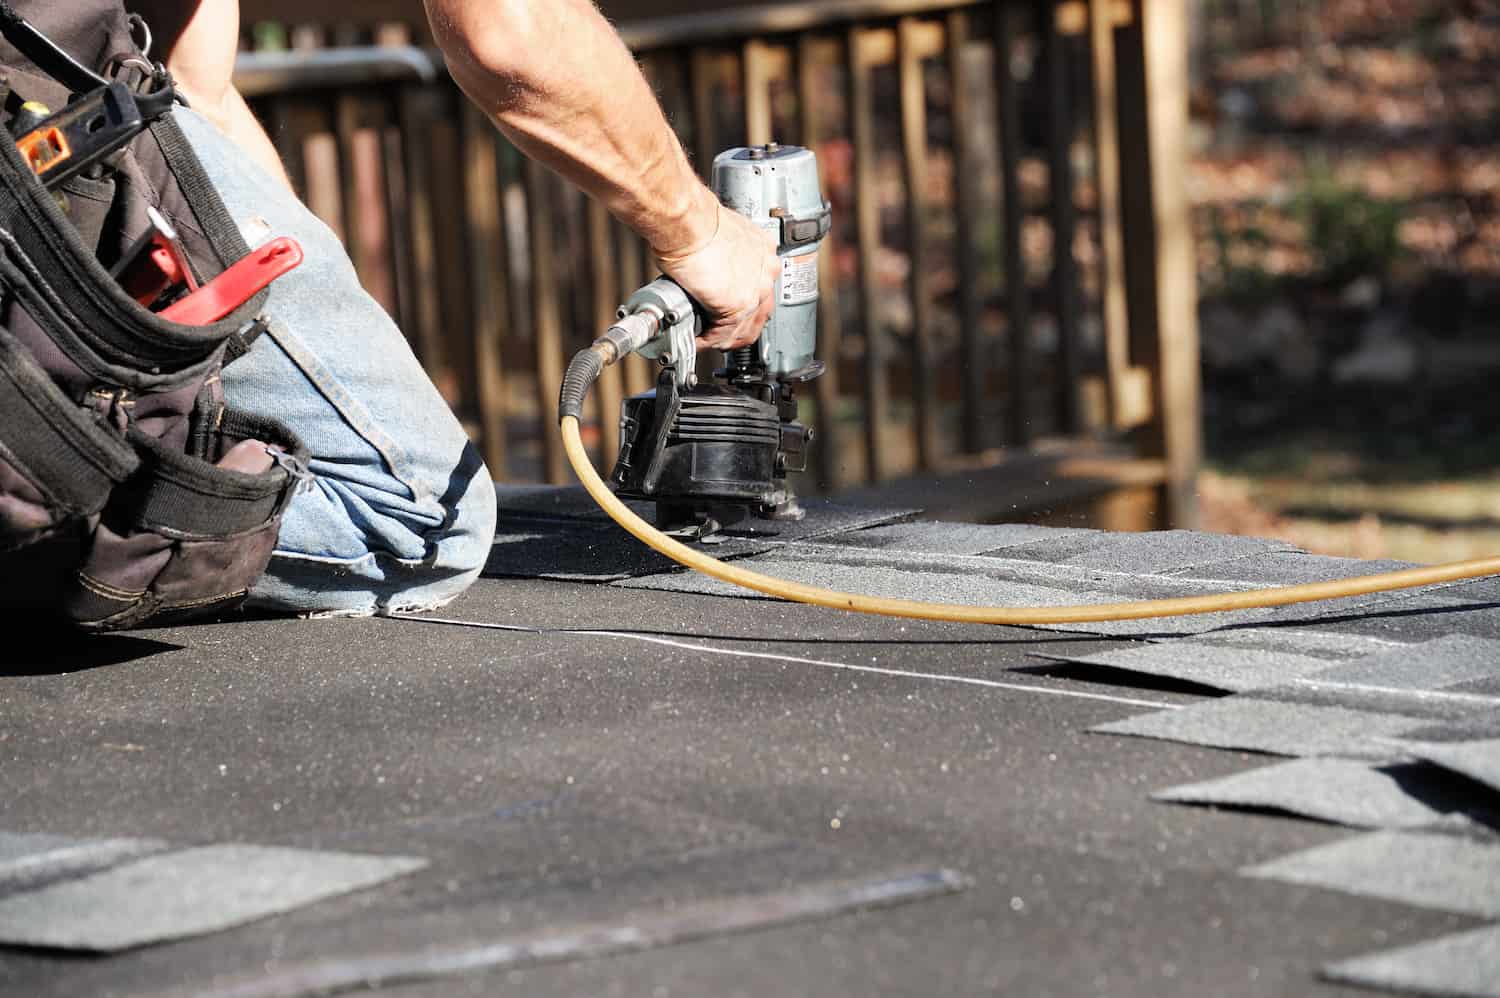 handyman using nail gun to install shingles on residential roof